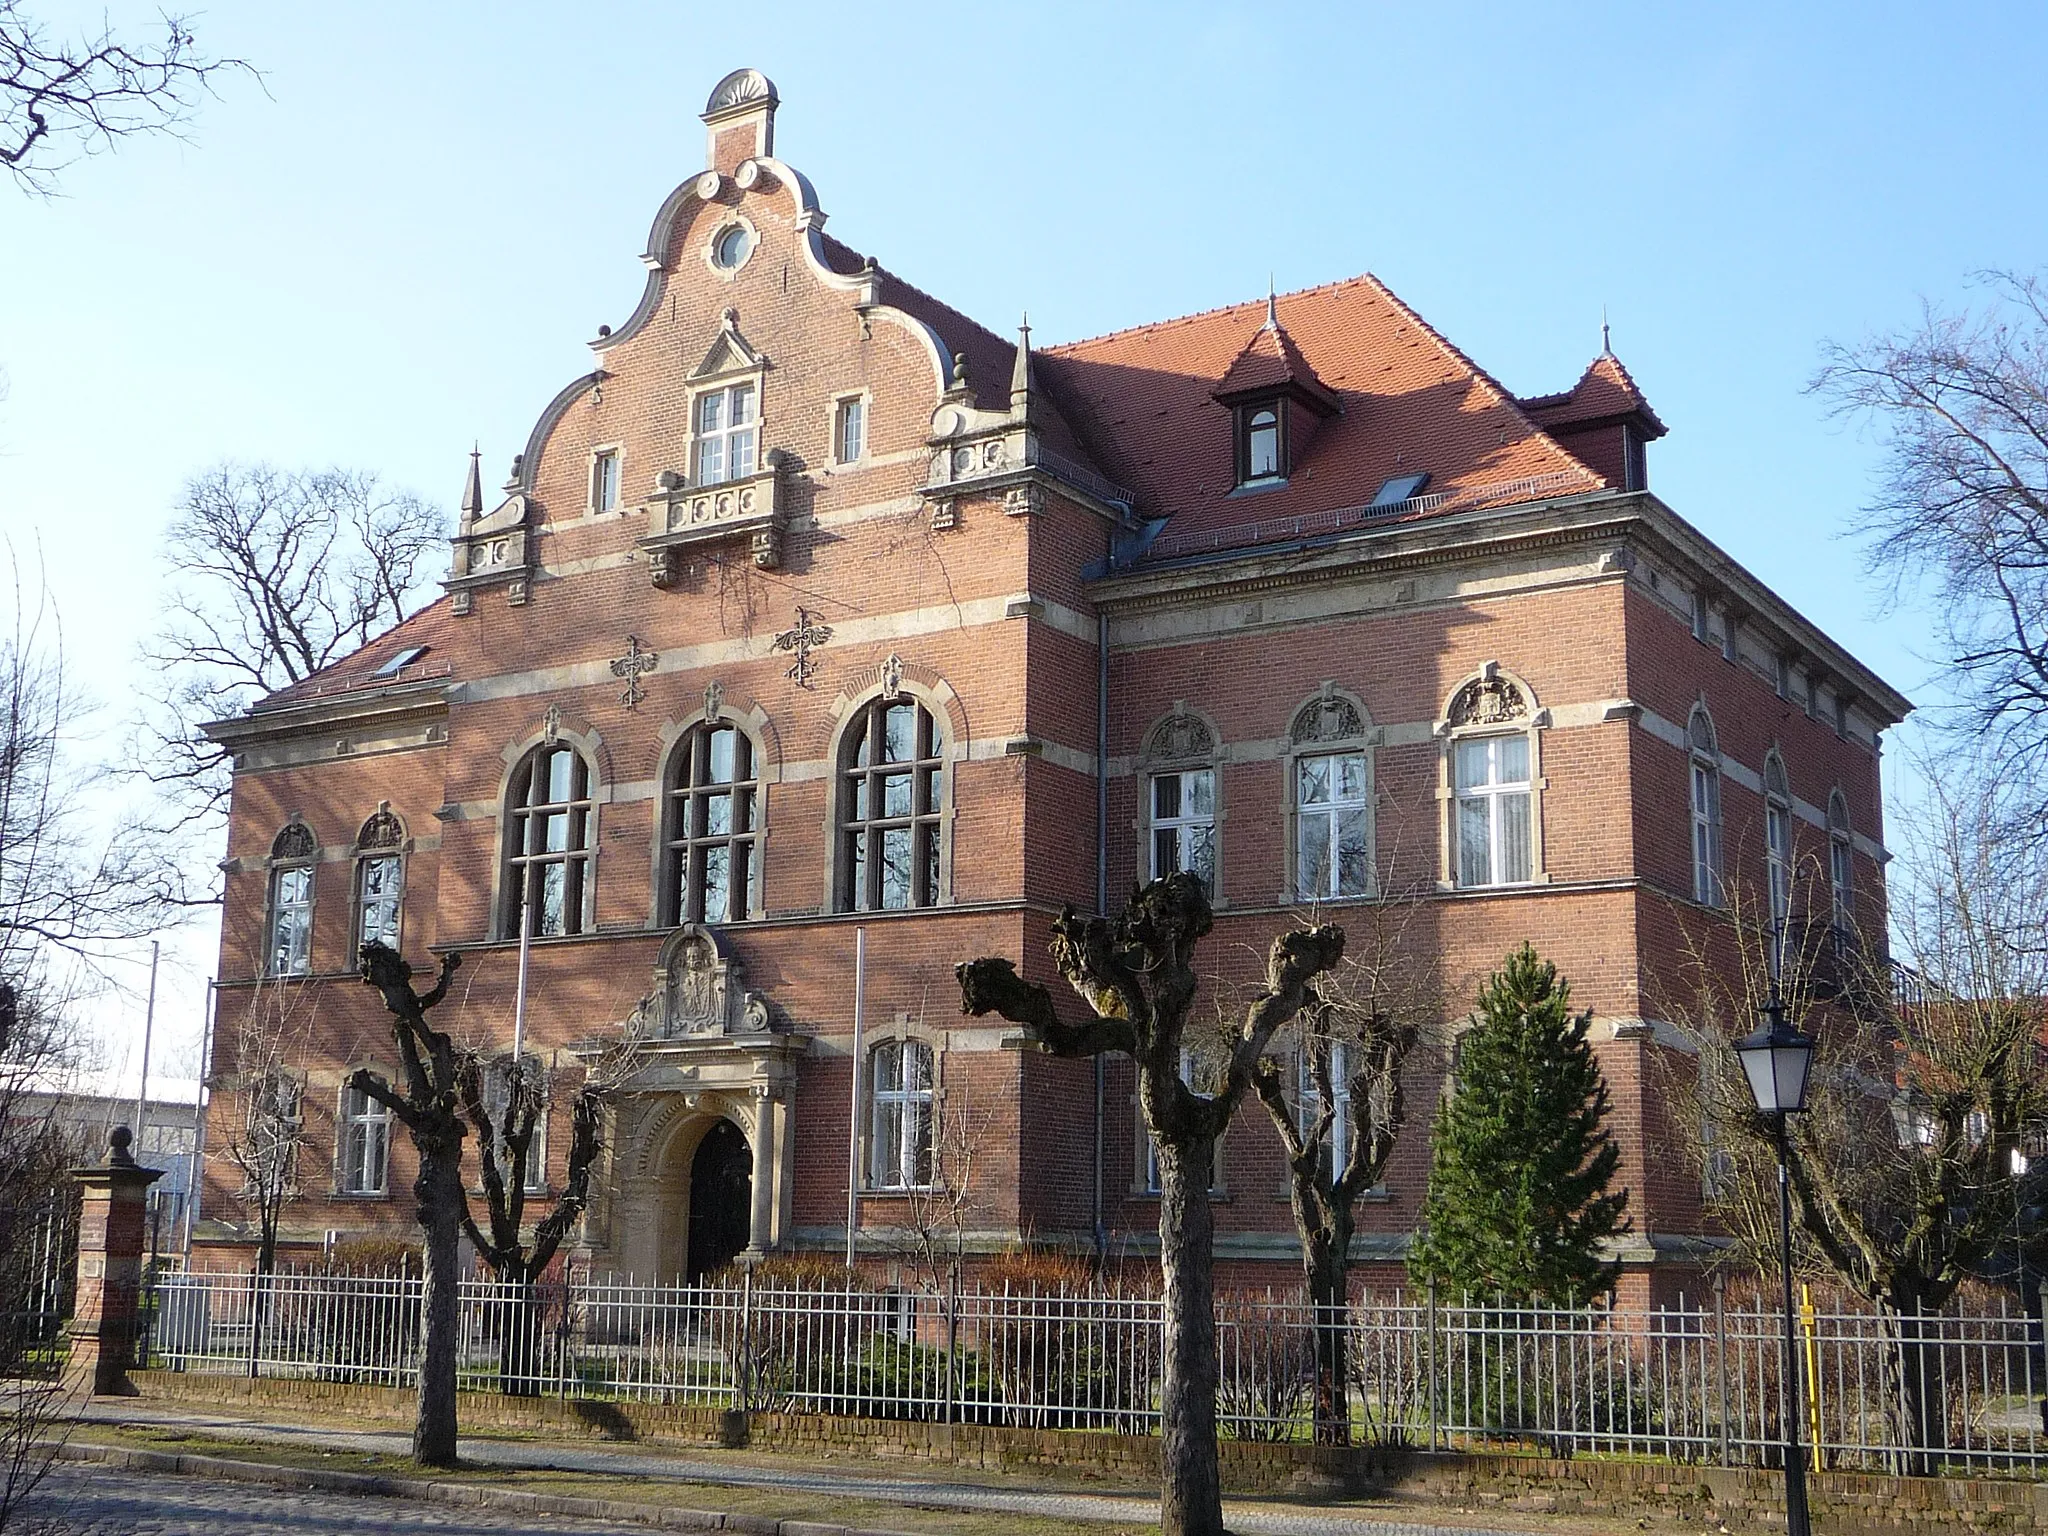 Photo showing: Town hall in Bad Belzig, Brandenburg, Germany